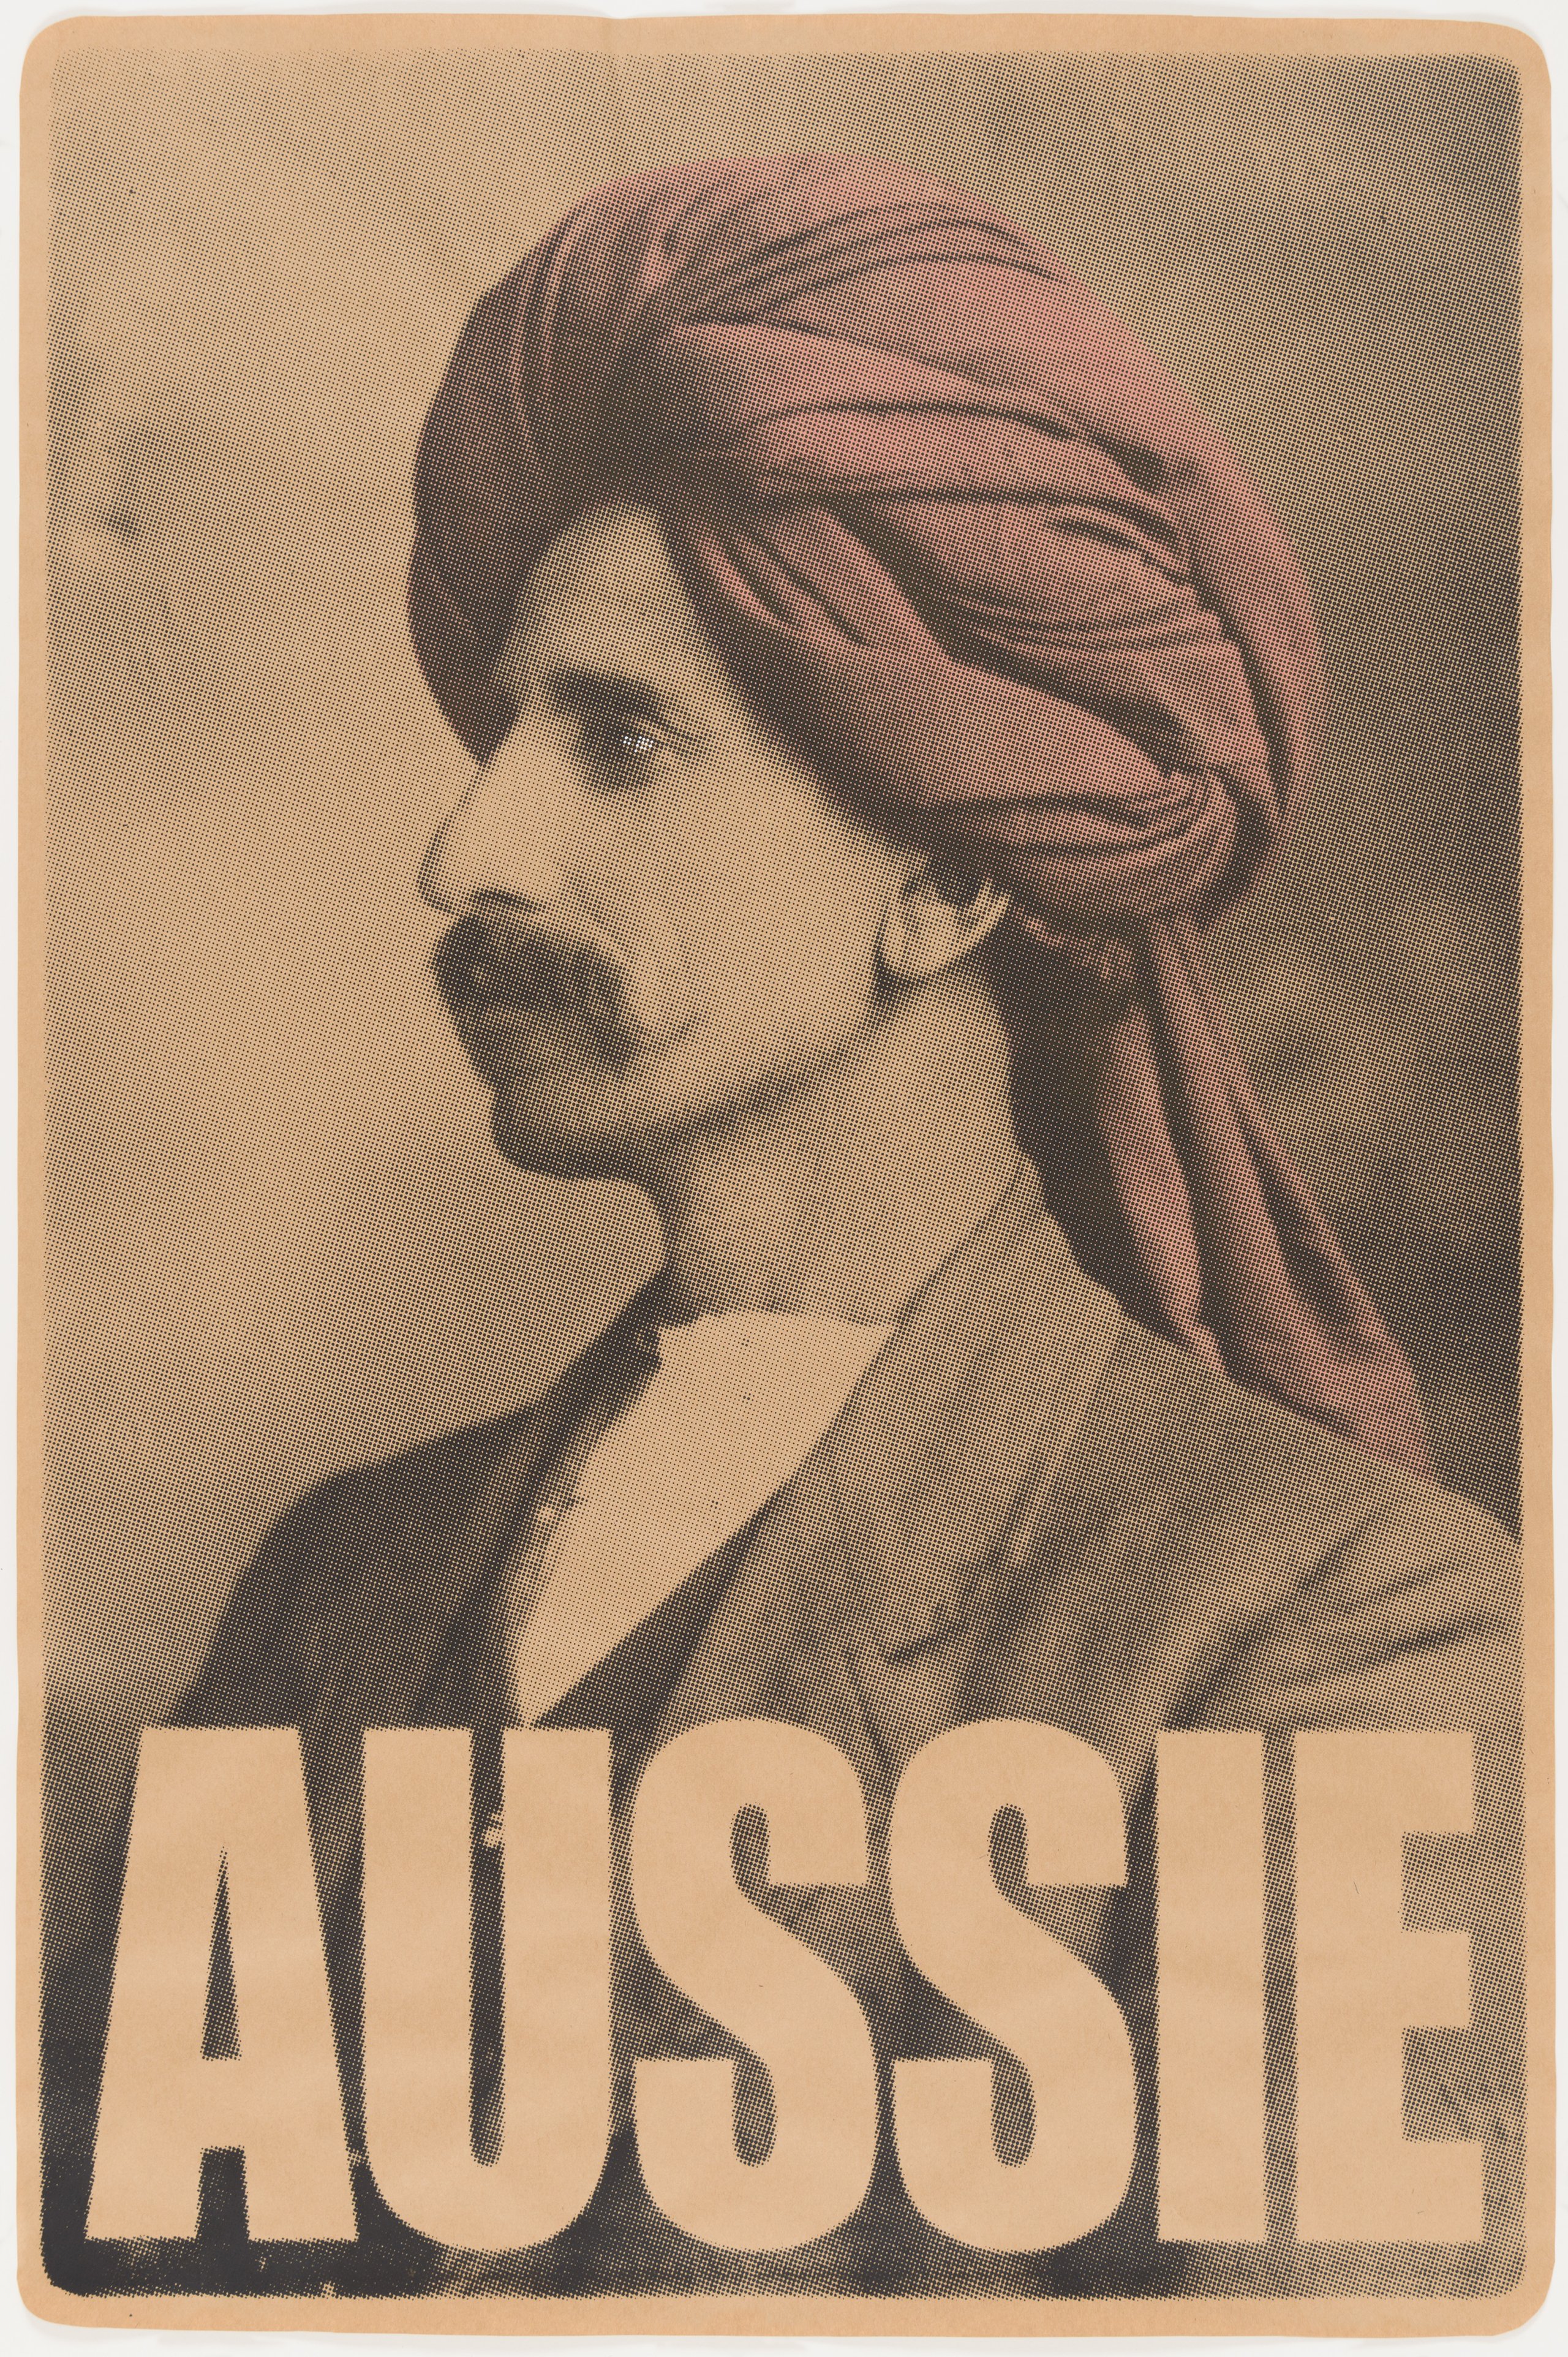 'Aussie' poster designed by Peter Drew